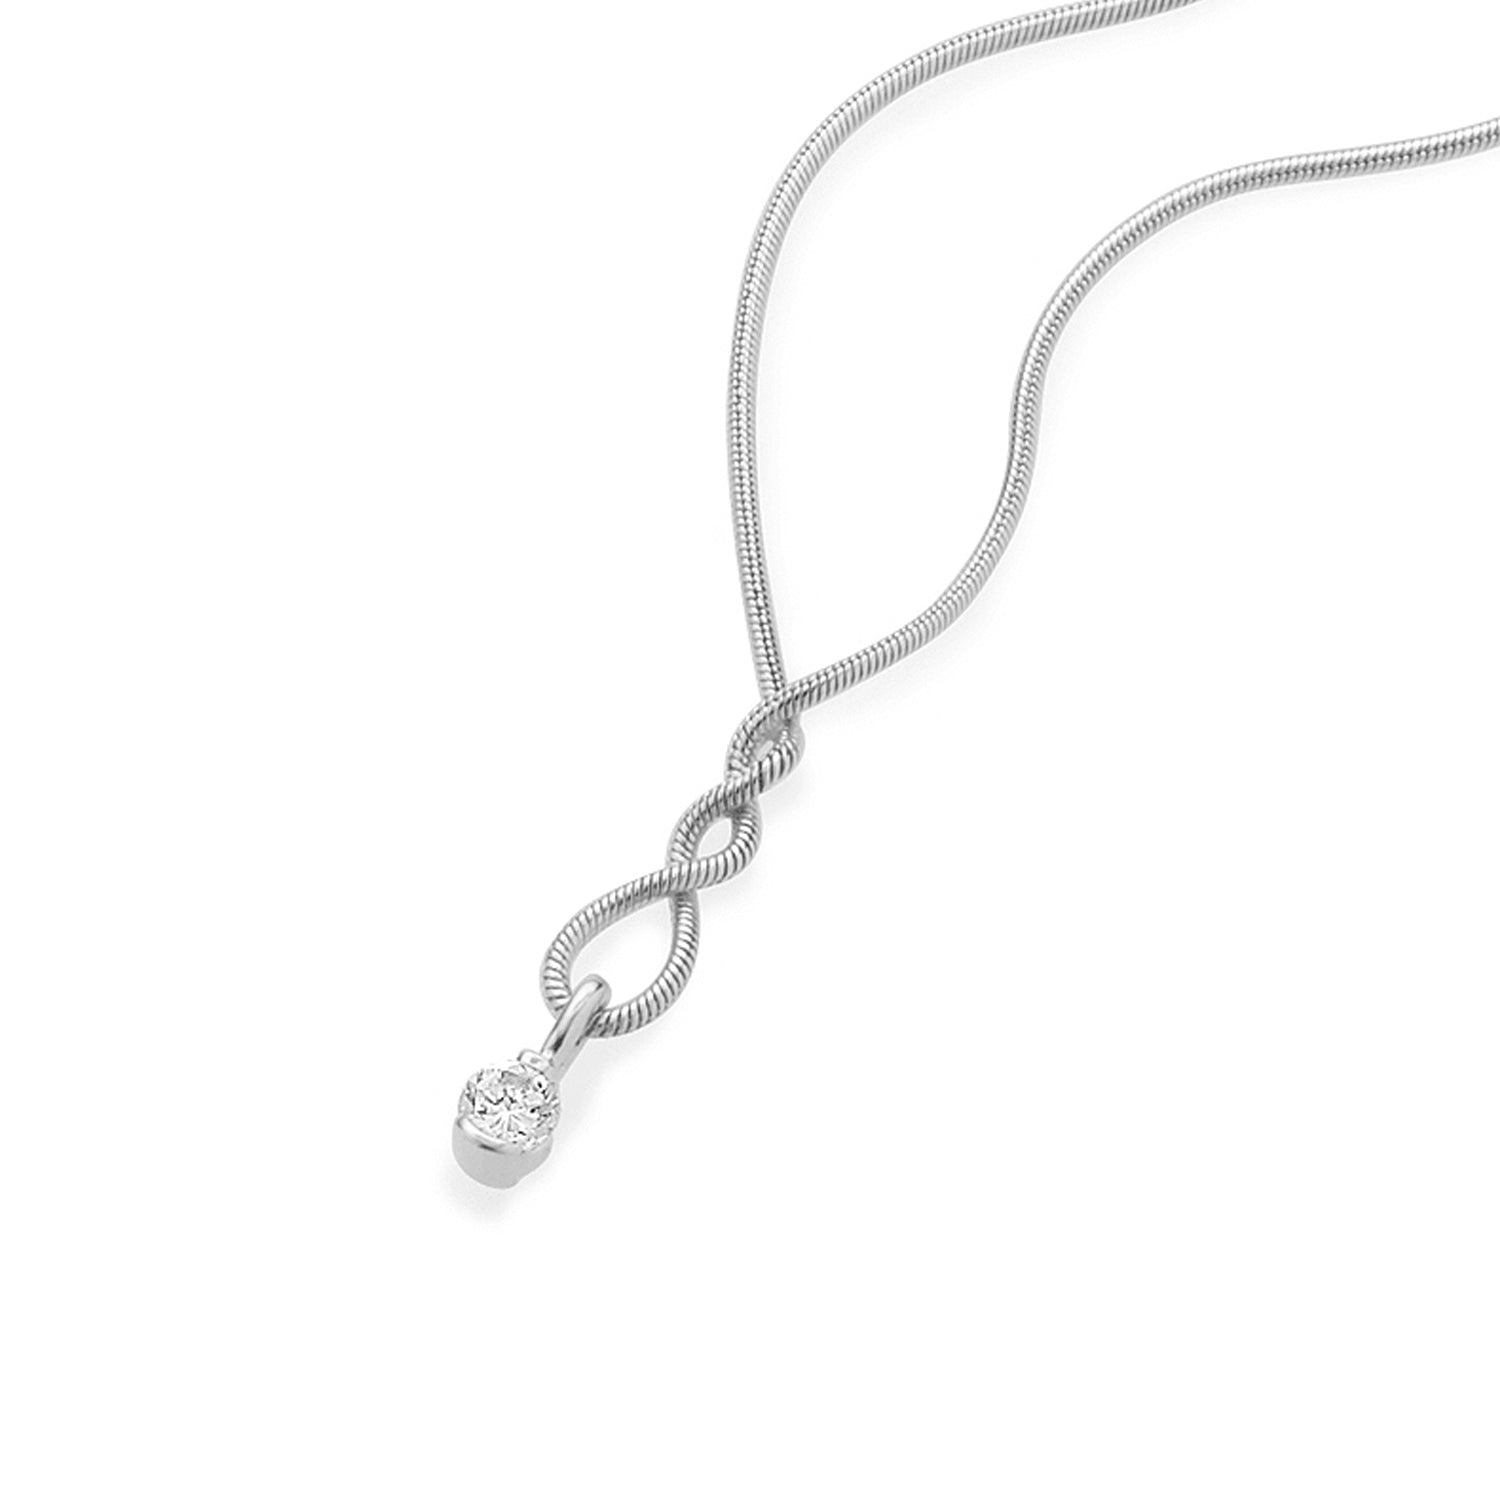 Sailor's Knot Diamond Necklace 18Karat 1 Diamond 0.25cts TW